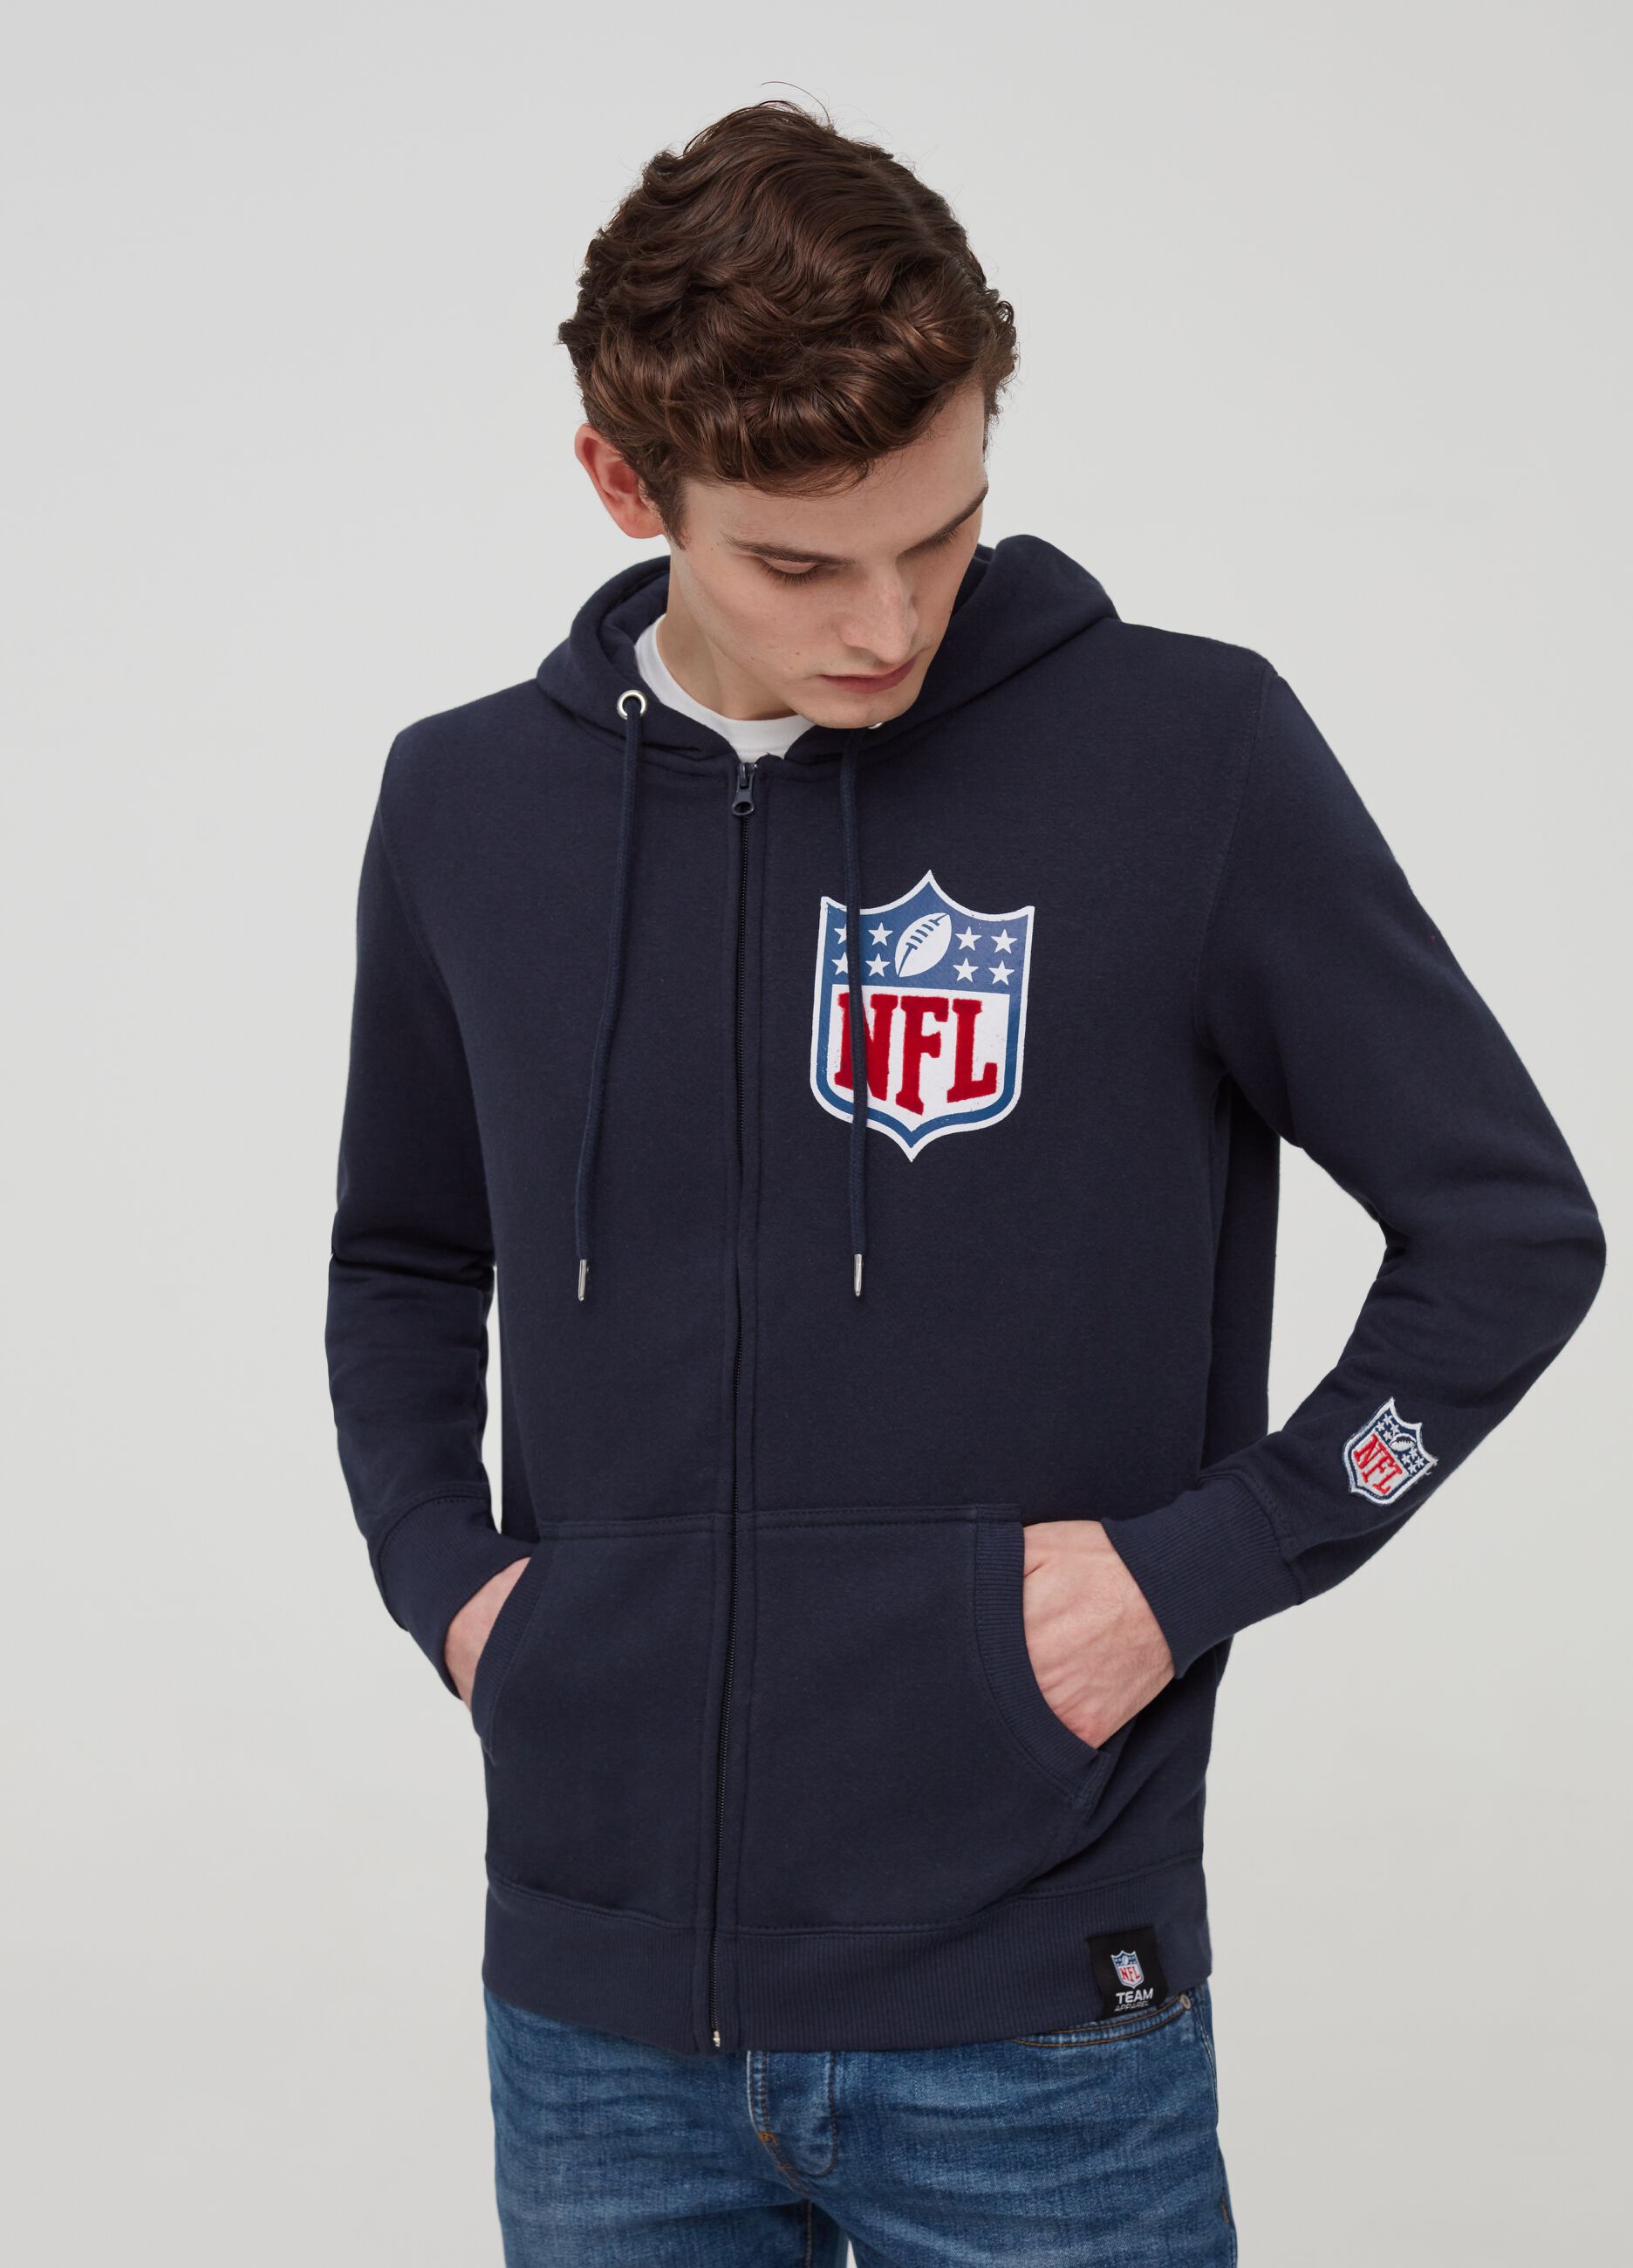 Full-zip sweatshirt with hood and NFL print